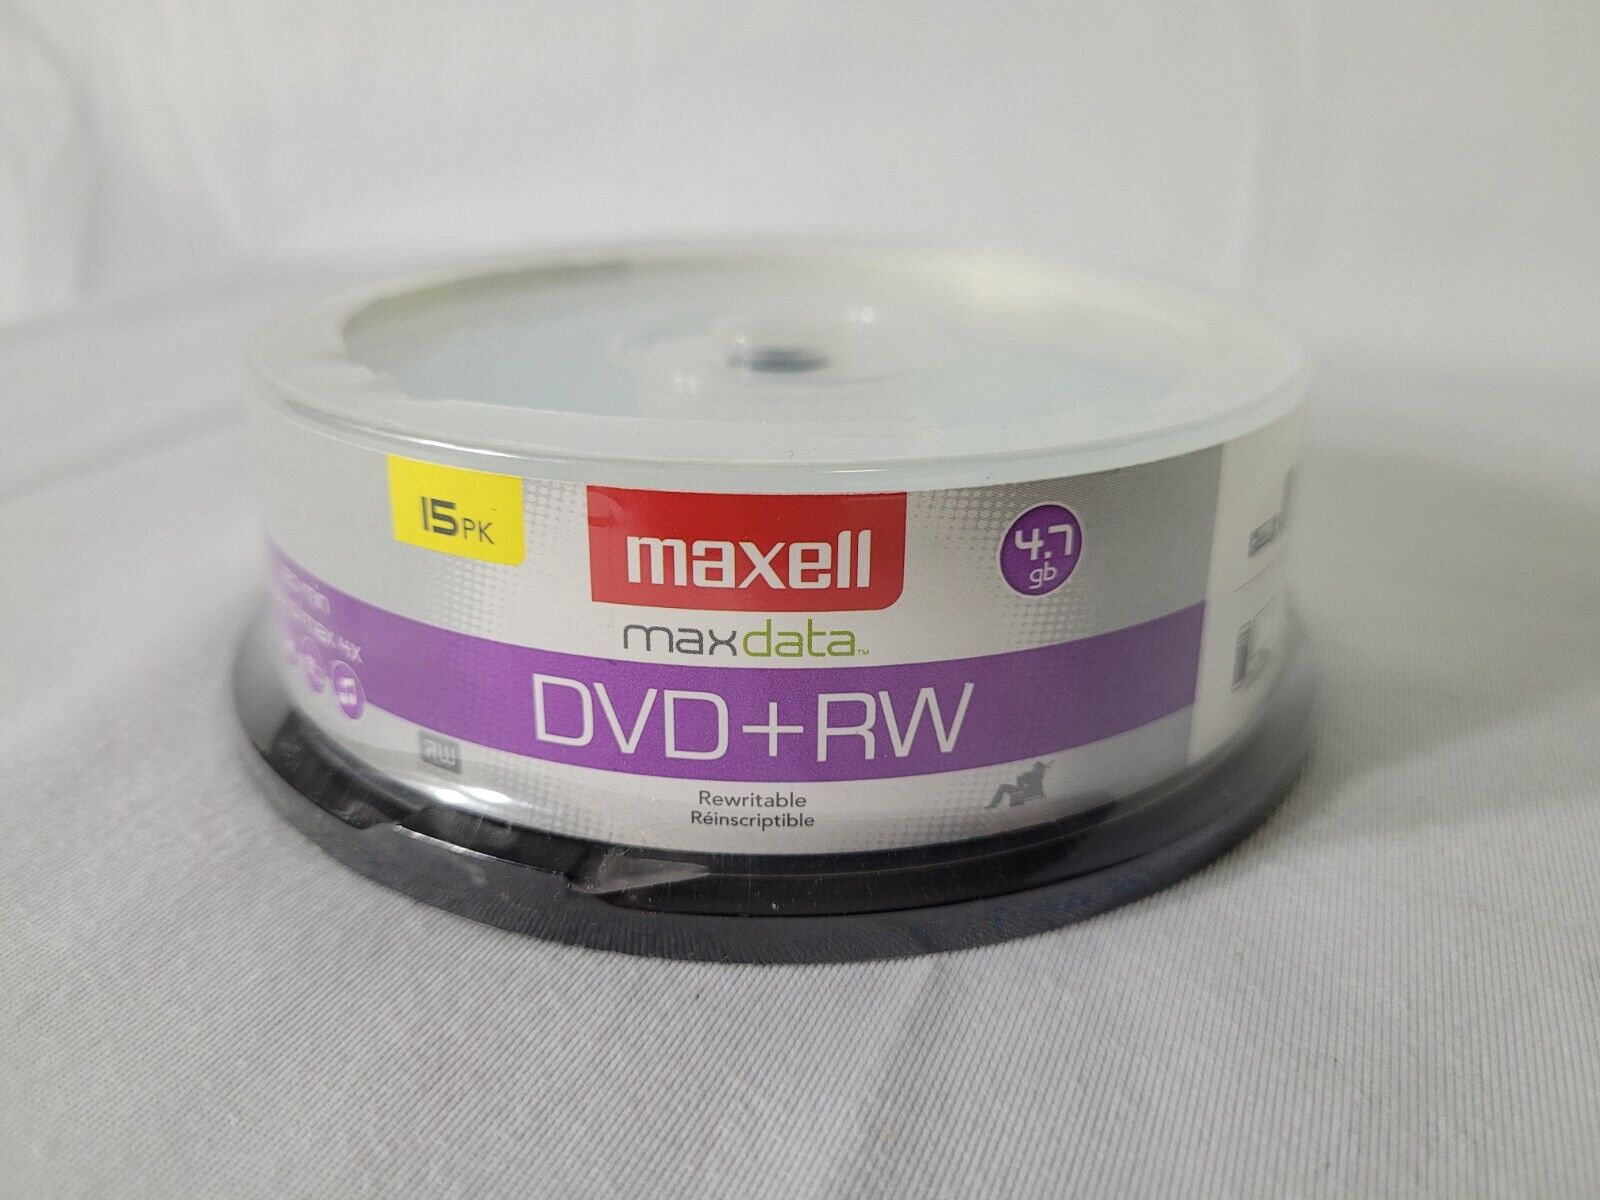 Maxell Rewritable 4.7gb DVD+RW - 15pk - Blank Discs